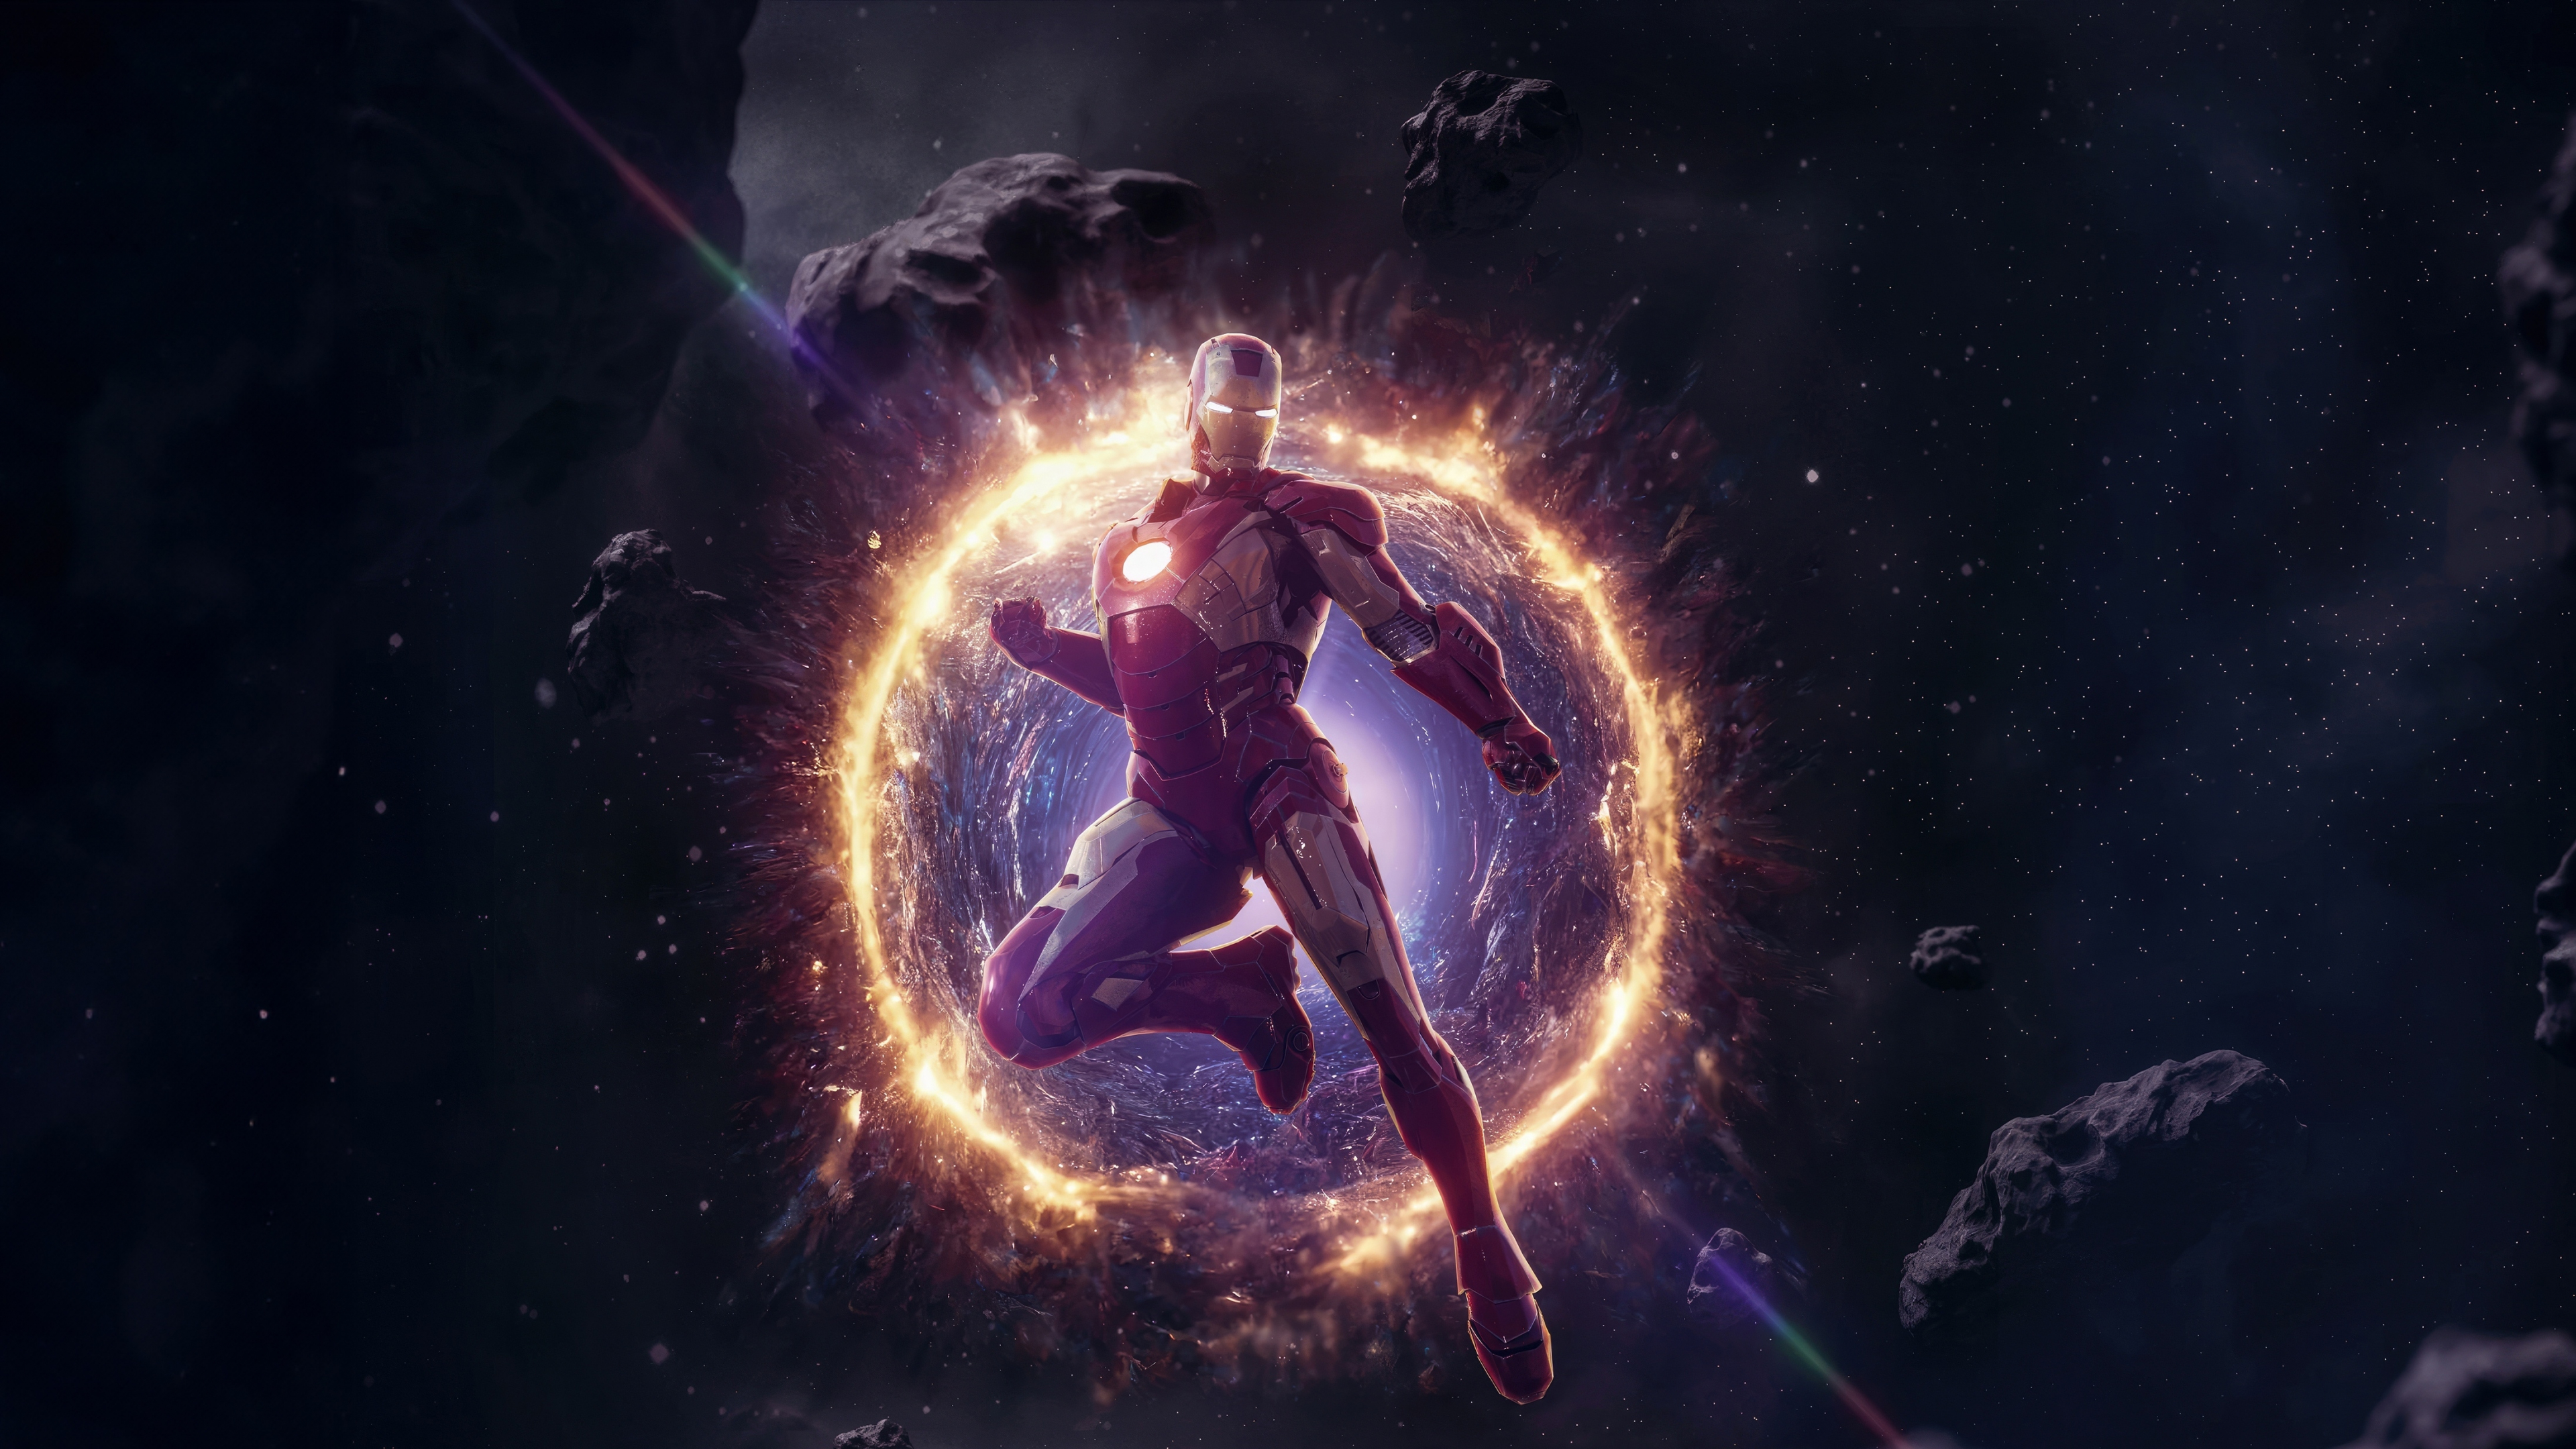 Iron man through the wormhole, space, 3840x2160 wallpaper